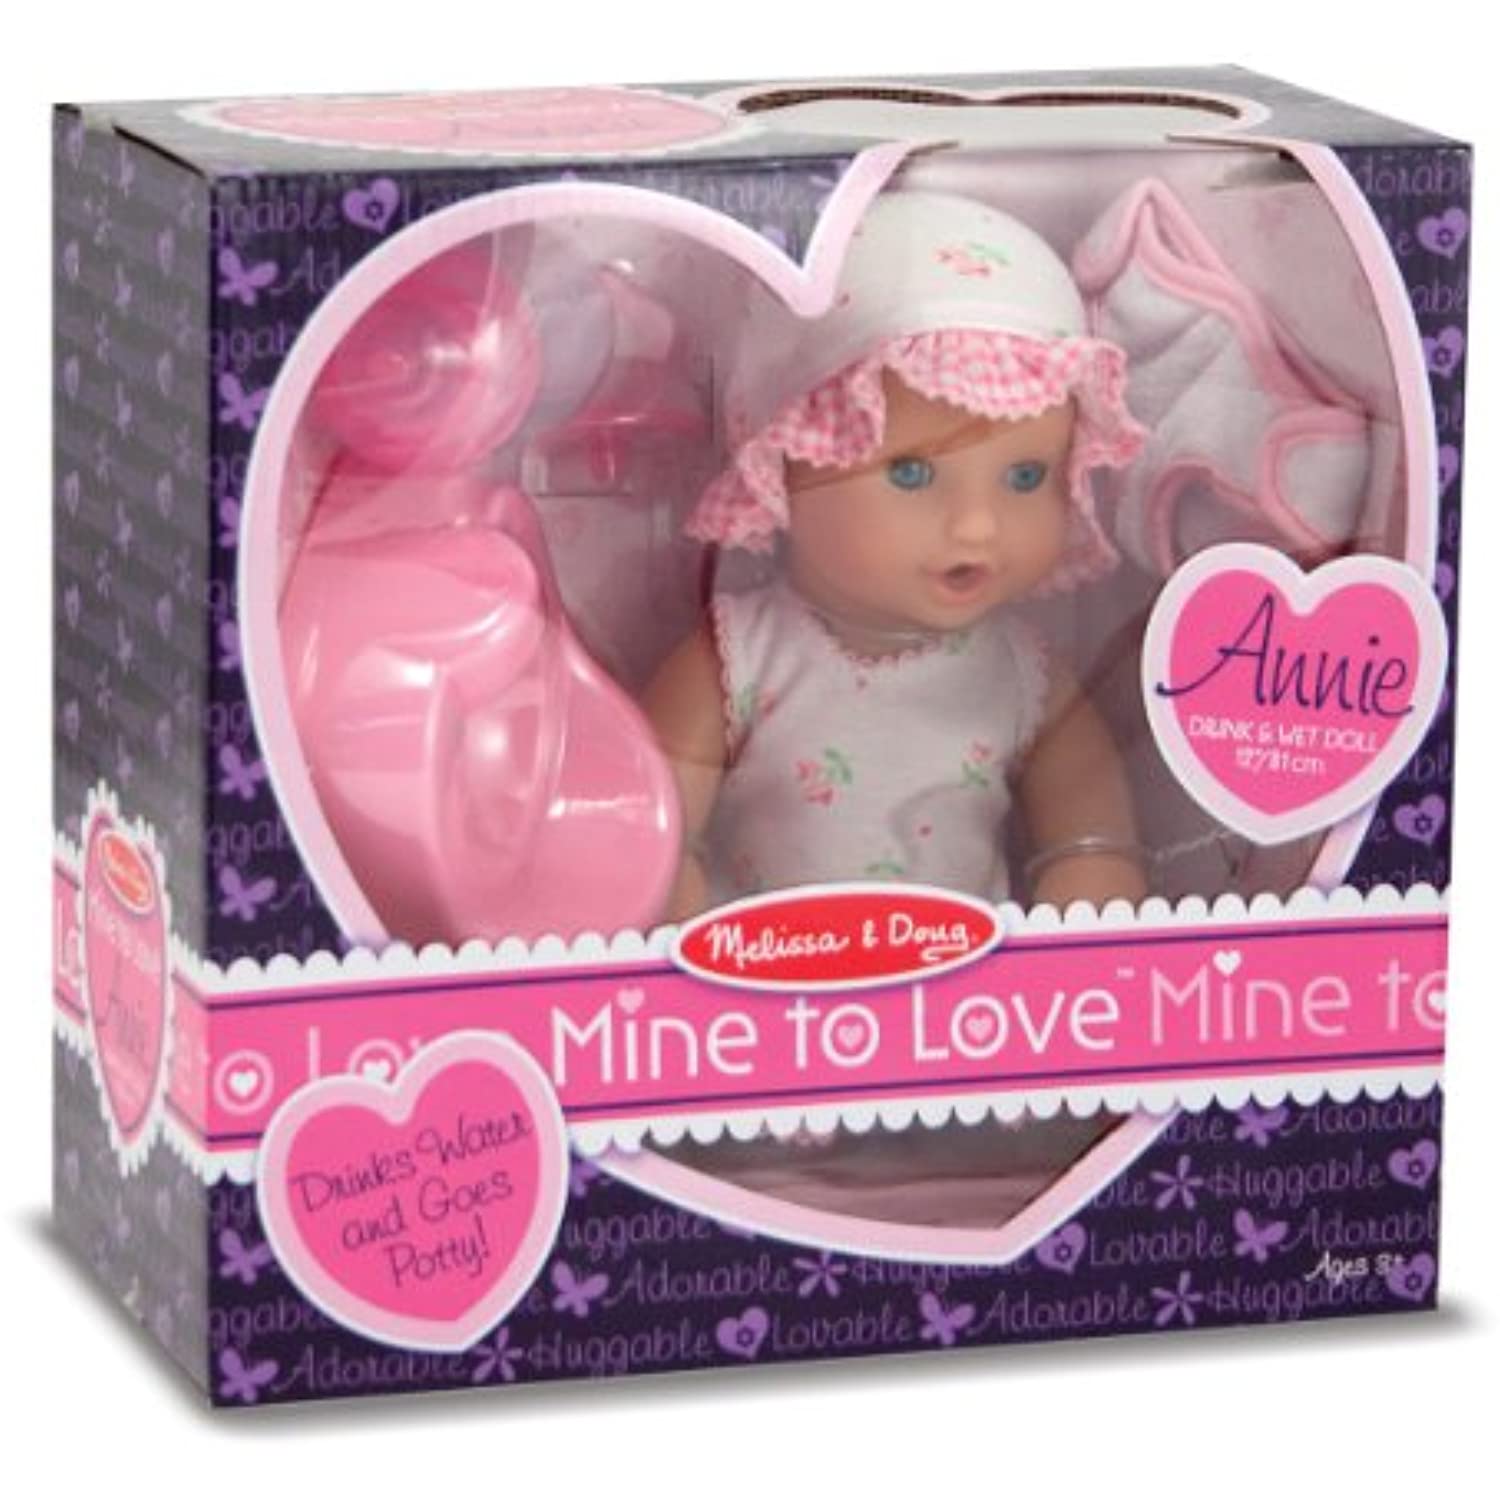 Melissa & Doug Annie ~12" Drink and Wet Doll: Mine to Love Doll Series & 1 Scratch Art Mini-Pad Bundle (04880)